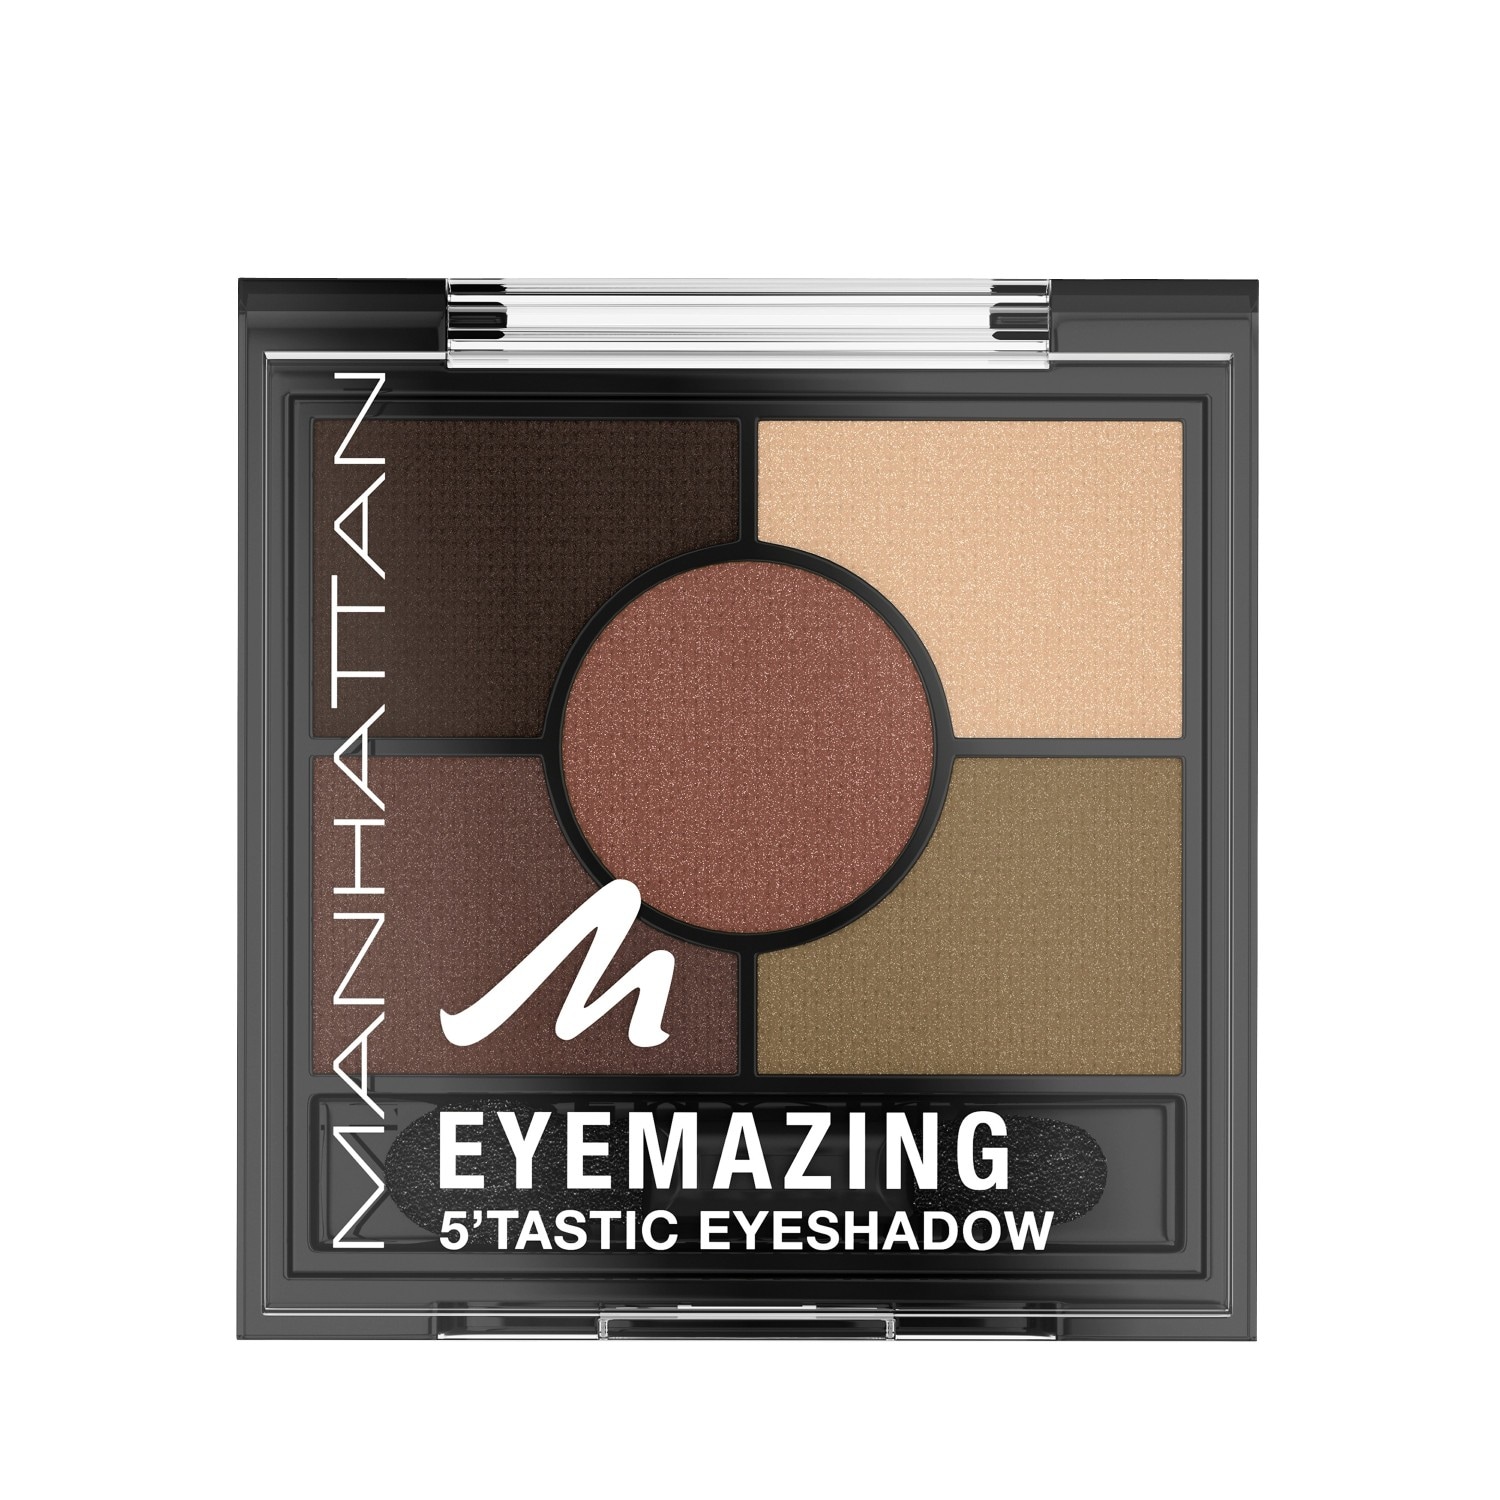 Manhattan Eyemazing 5Tastic Eyeshadow, 002 Brixton Brown